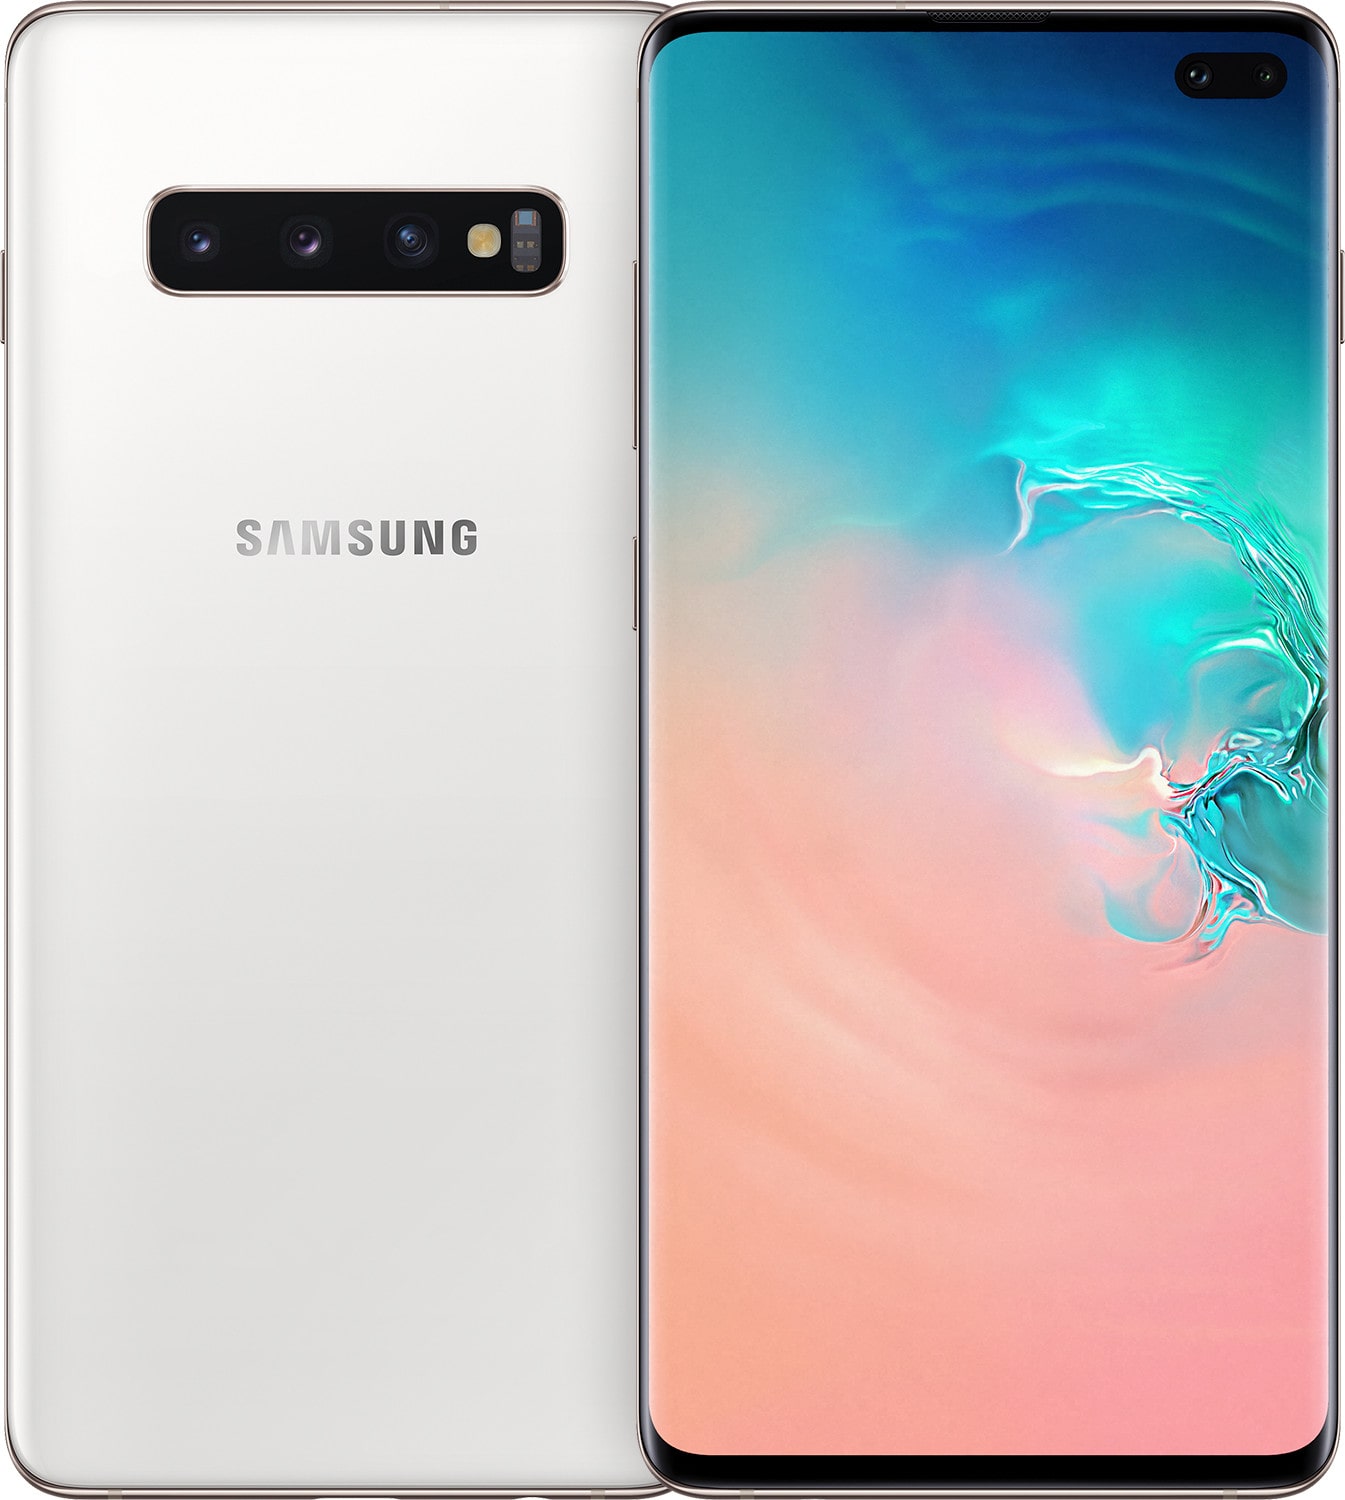 Samsung Galaxy S10 Plus image